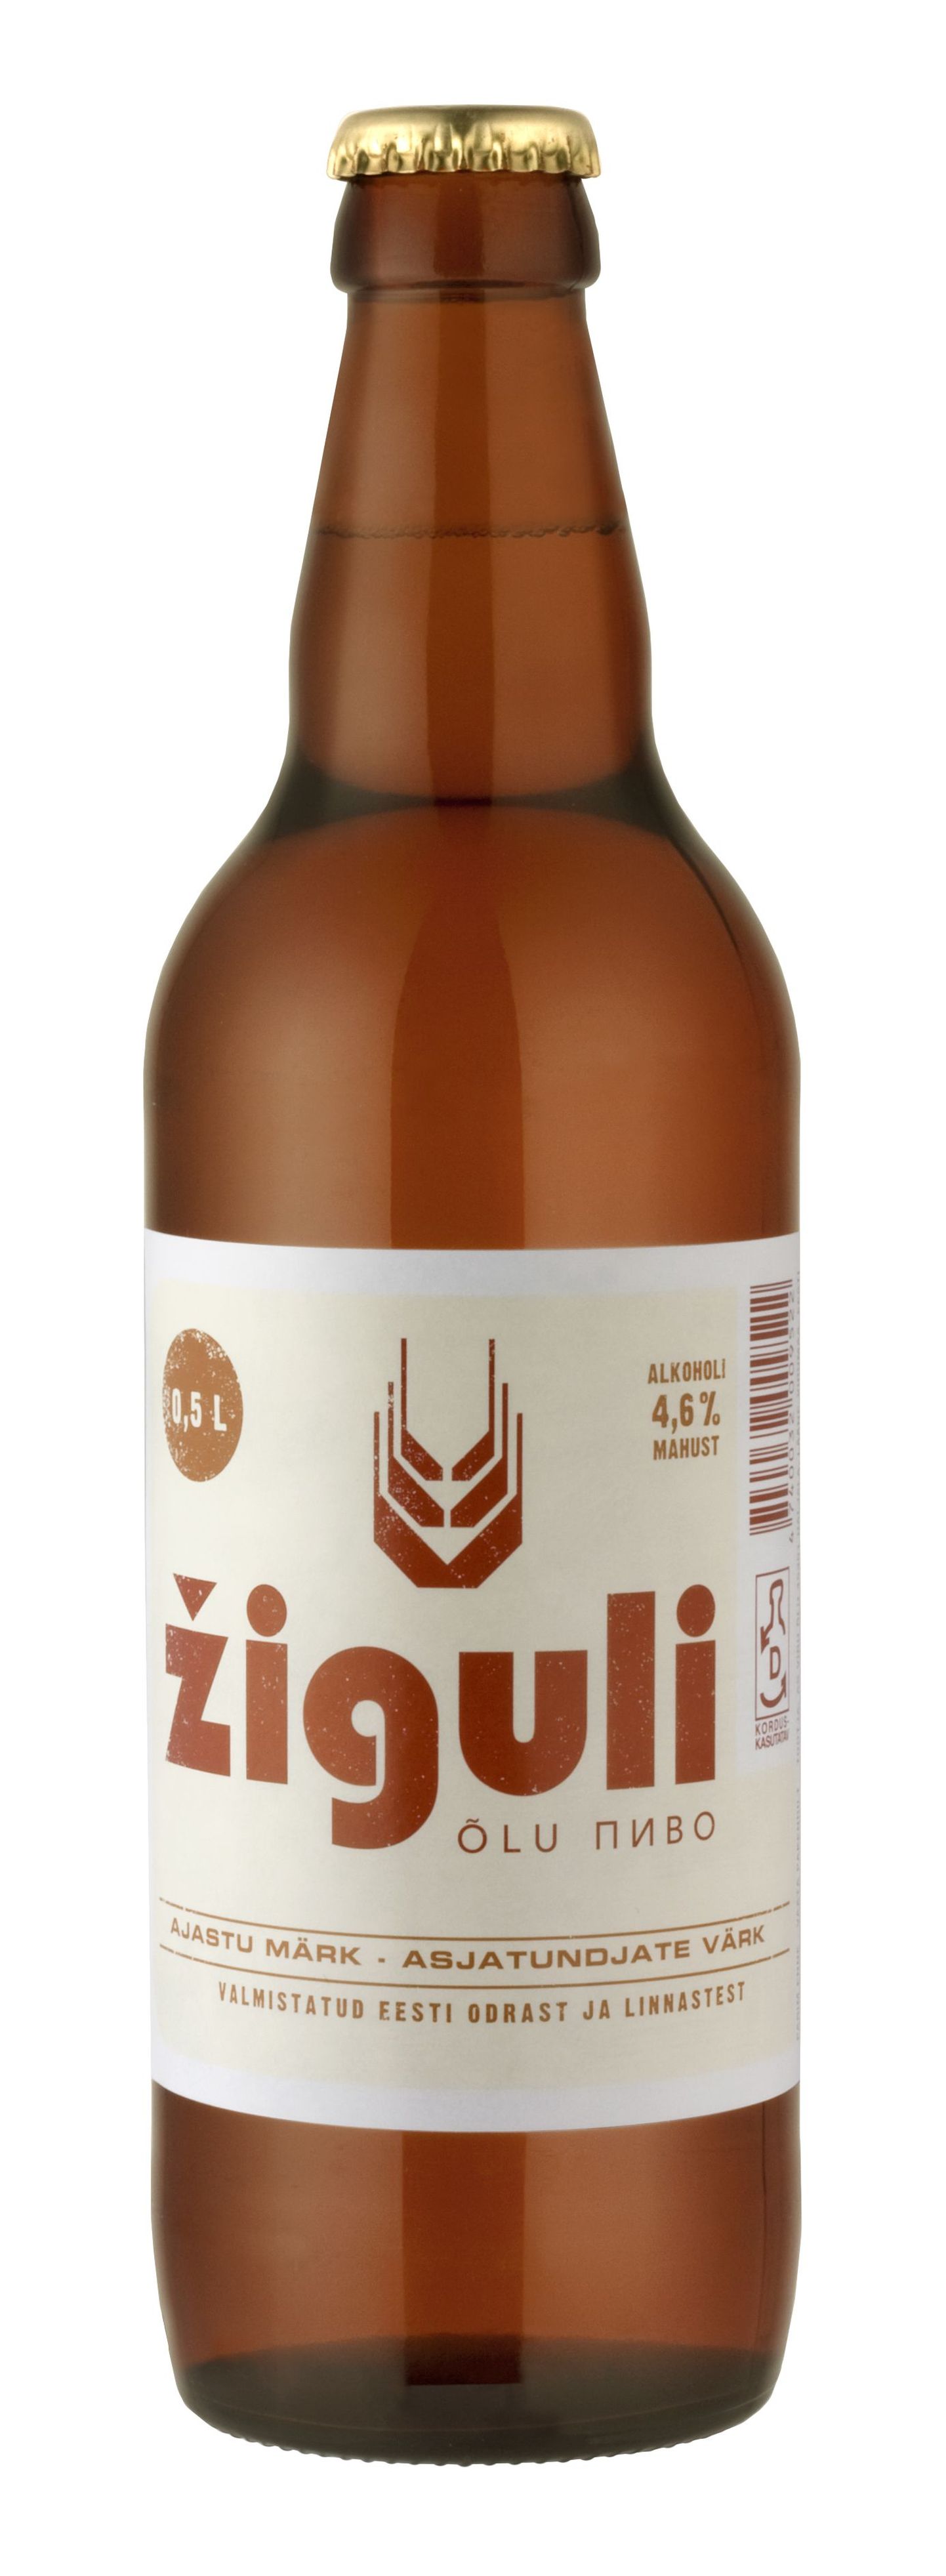 Viru Õlu hakkas taas tootma Žiguli õlut.